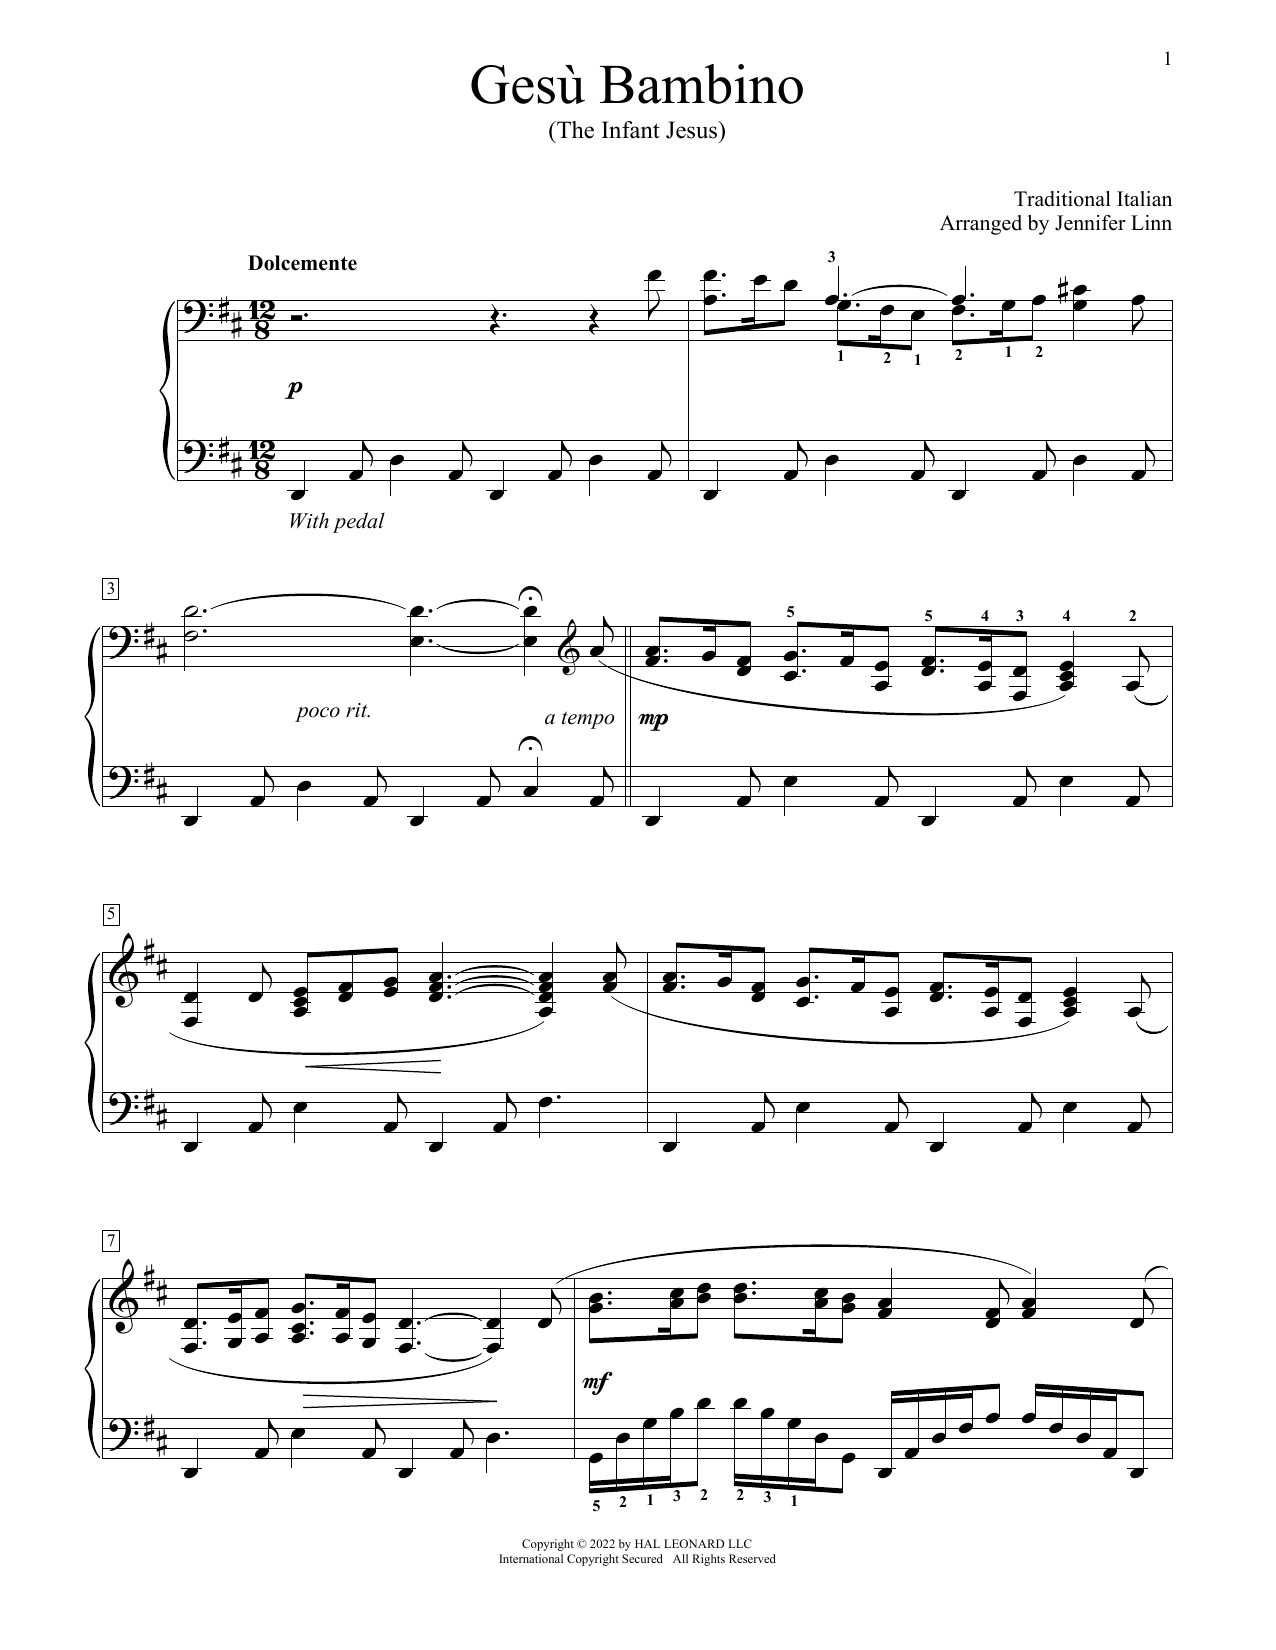 Download Traditional Italian Gesu Bambino (arr. Jennifer Linn) Sheet Music and learn how to play Educational Piano PDF digital score in minutes